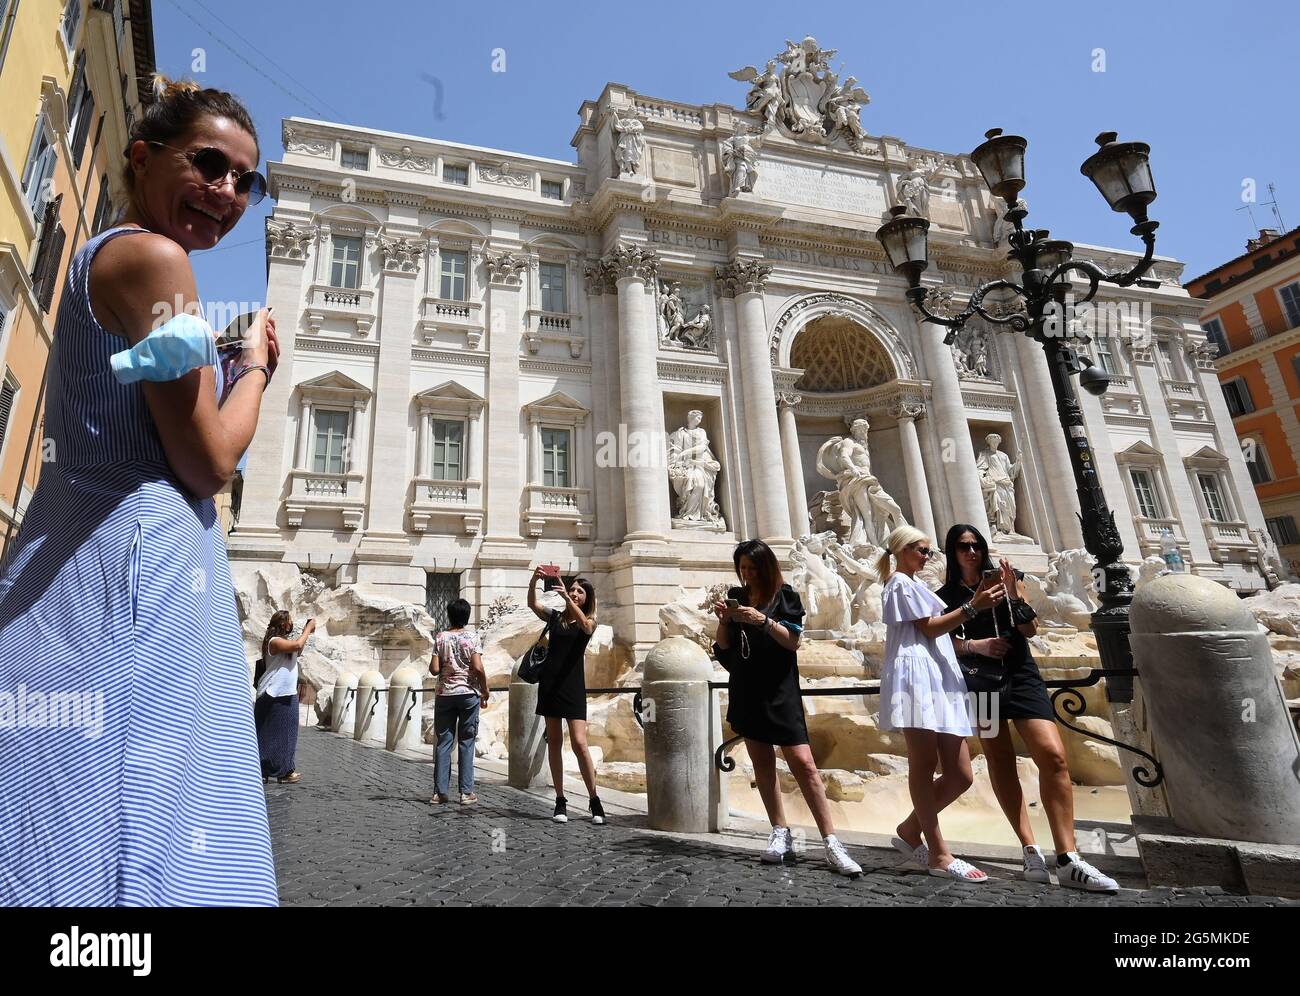 Rome, Italy. 28th June, 2021. People visit the Fontana di Trevi in